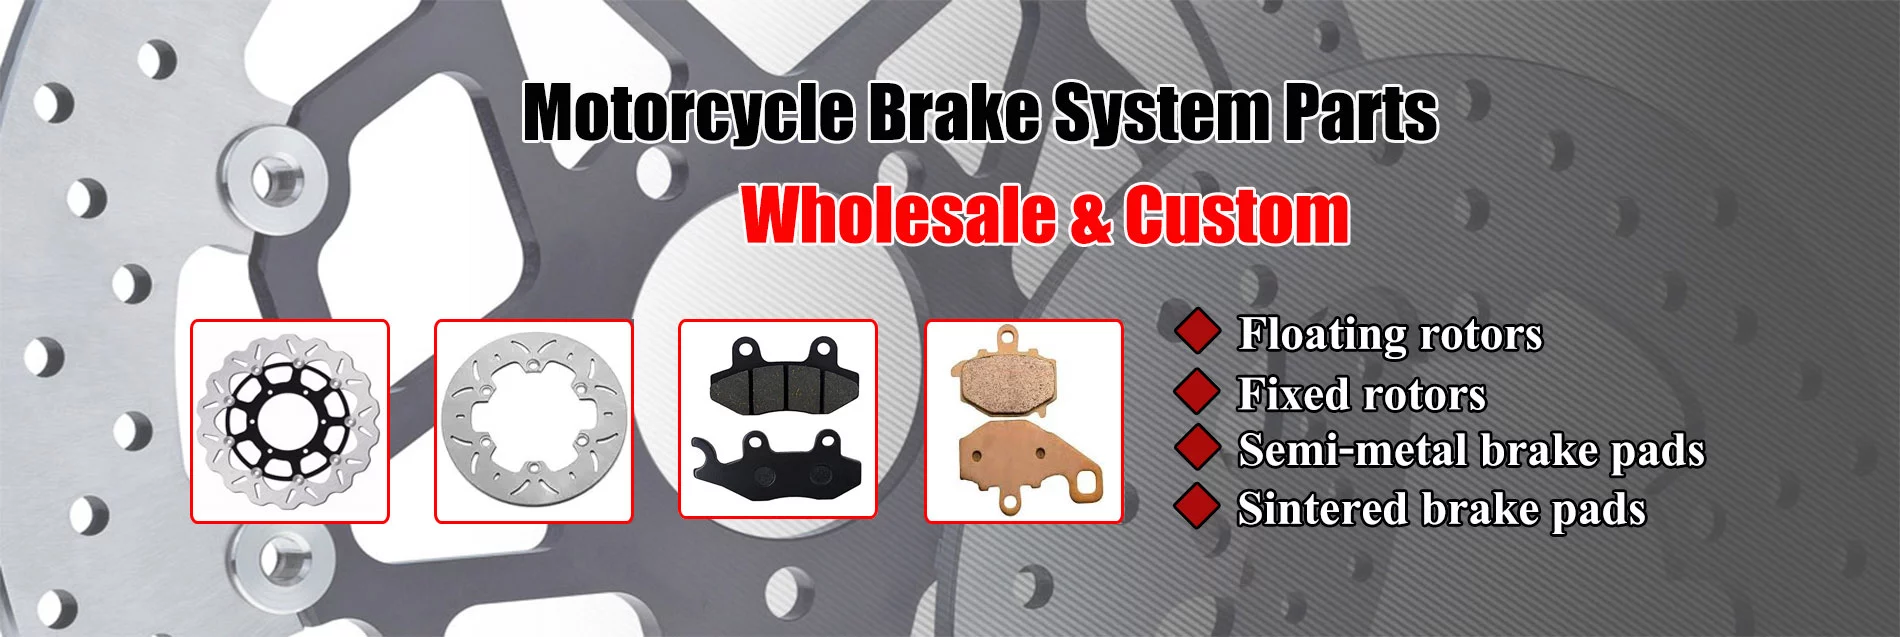 motorcycle brake system parts banner